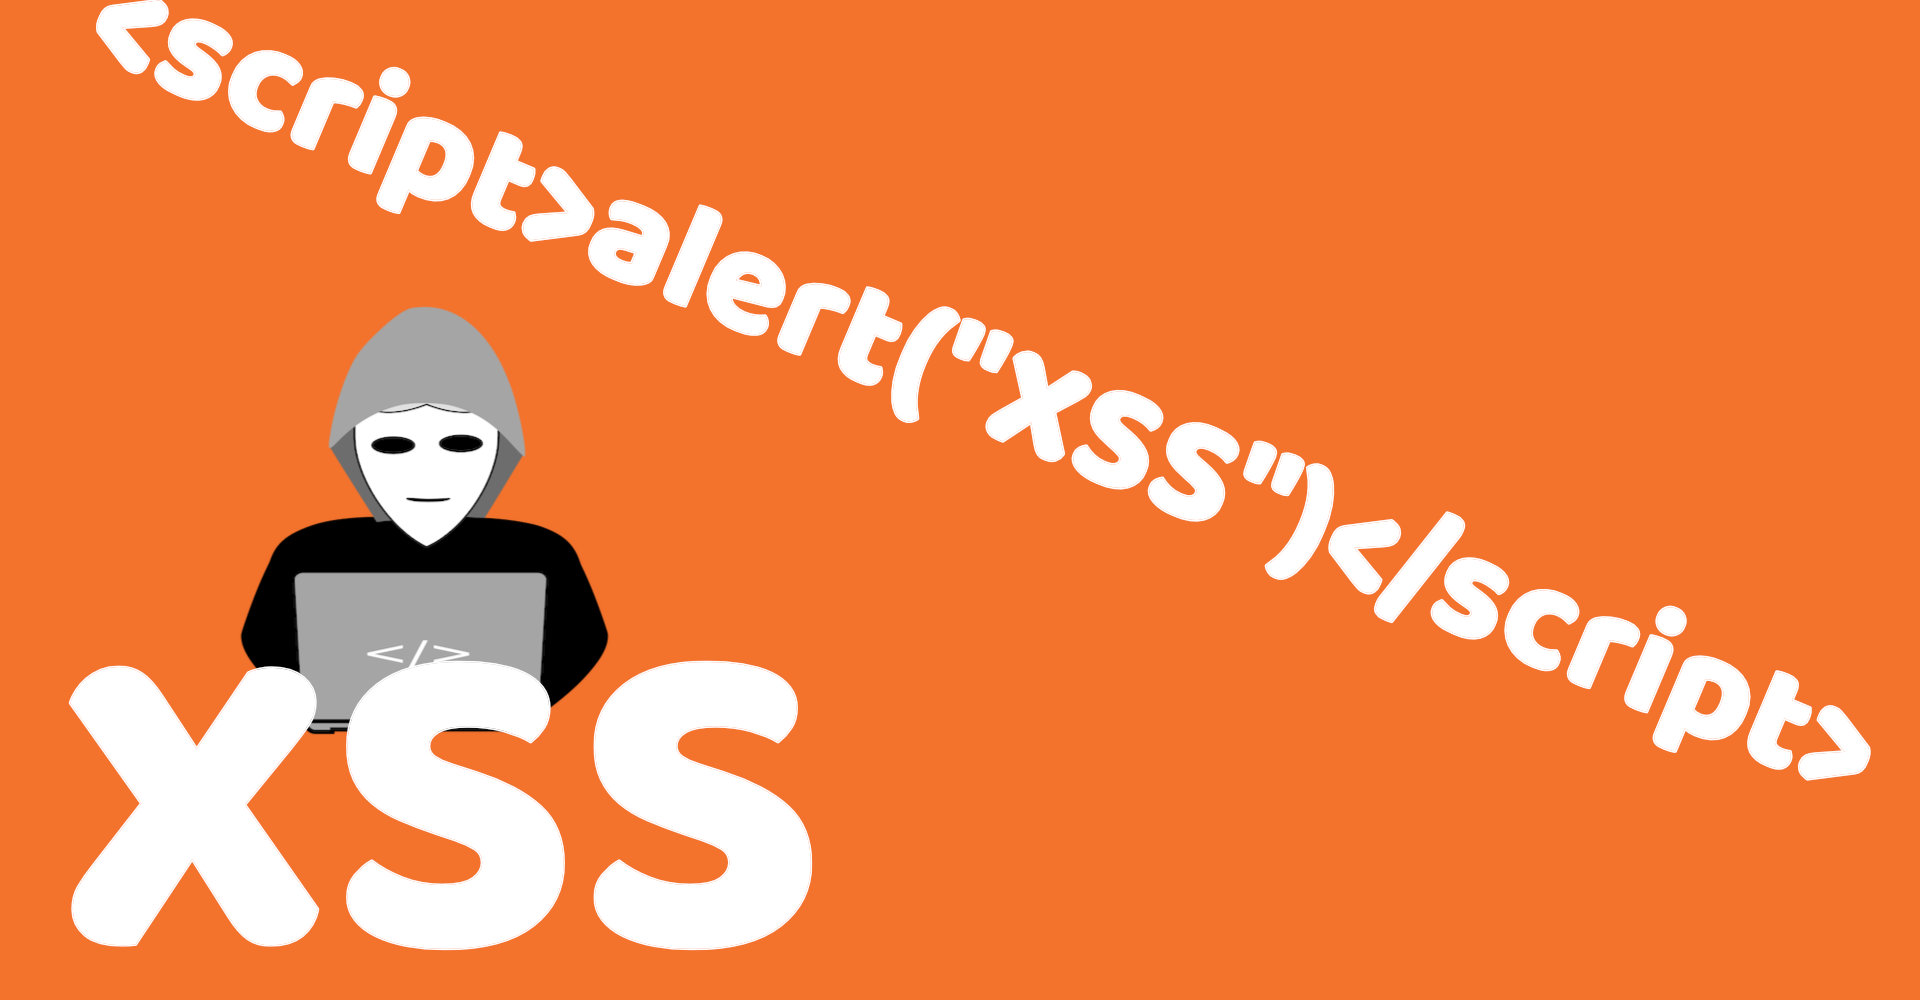 Cross-Site Scripting (XSS) Attack in Modern Frontend Web